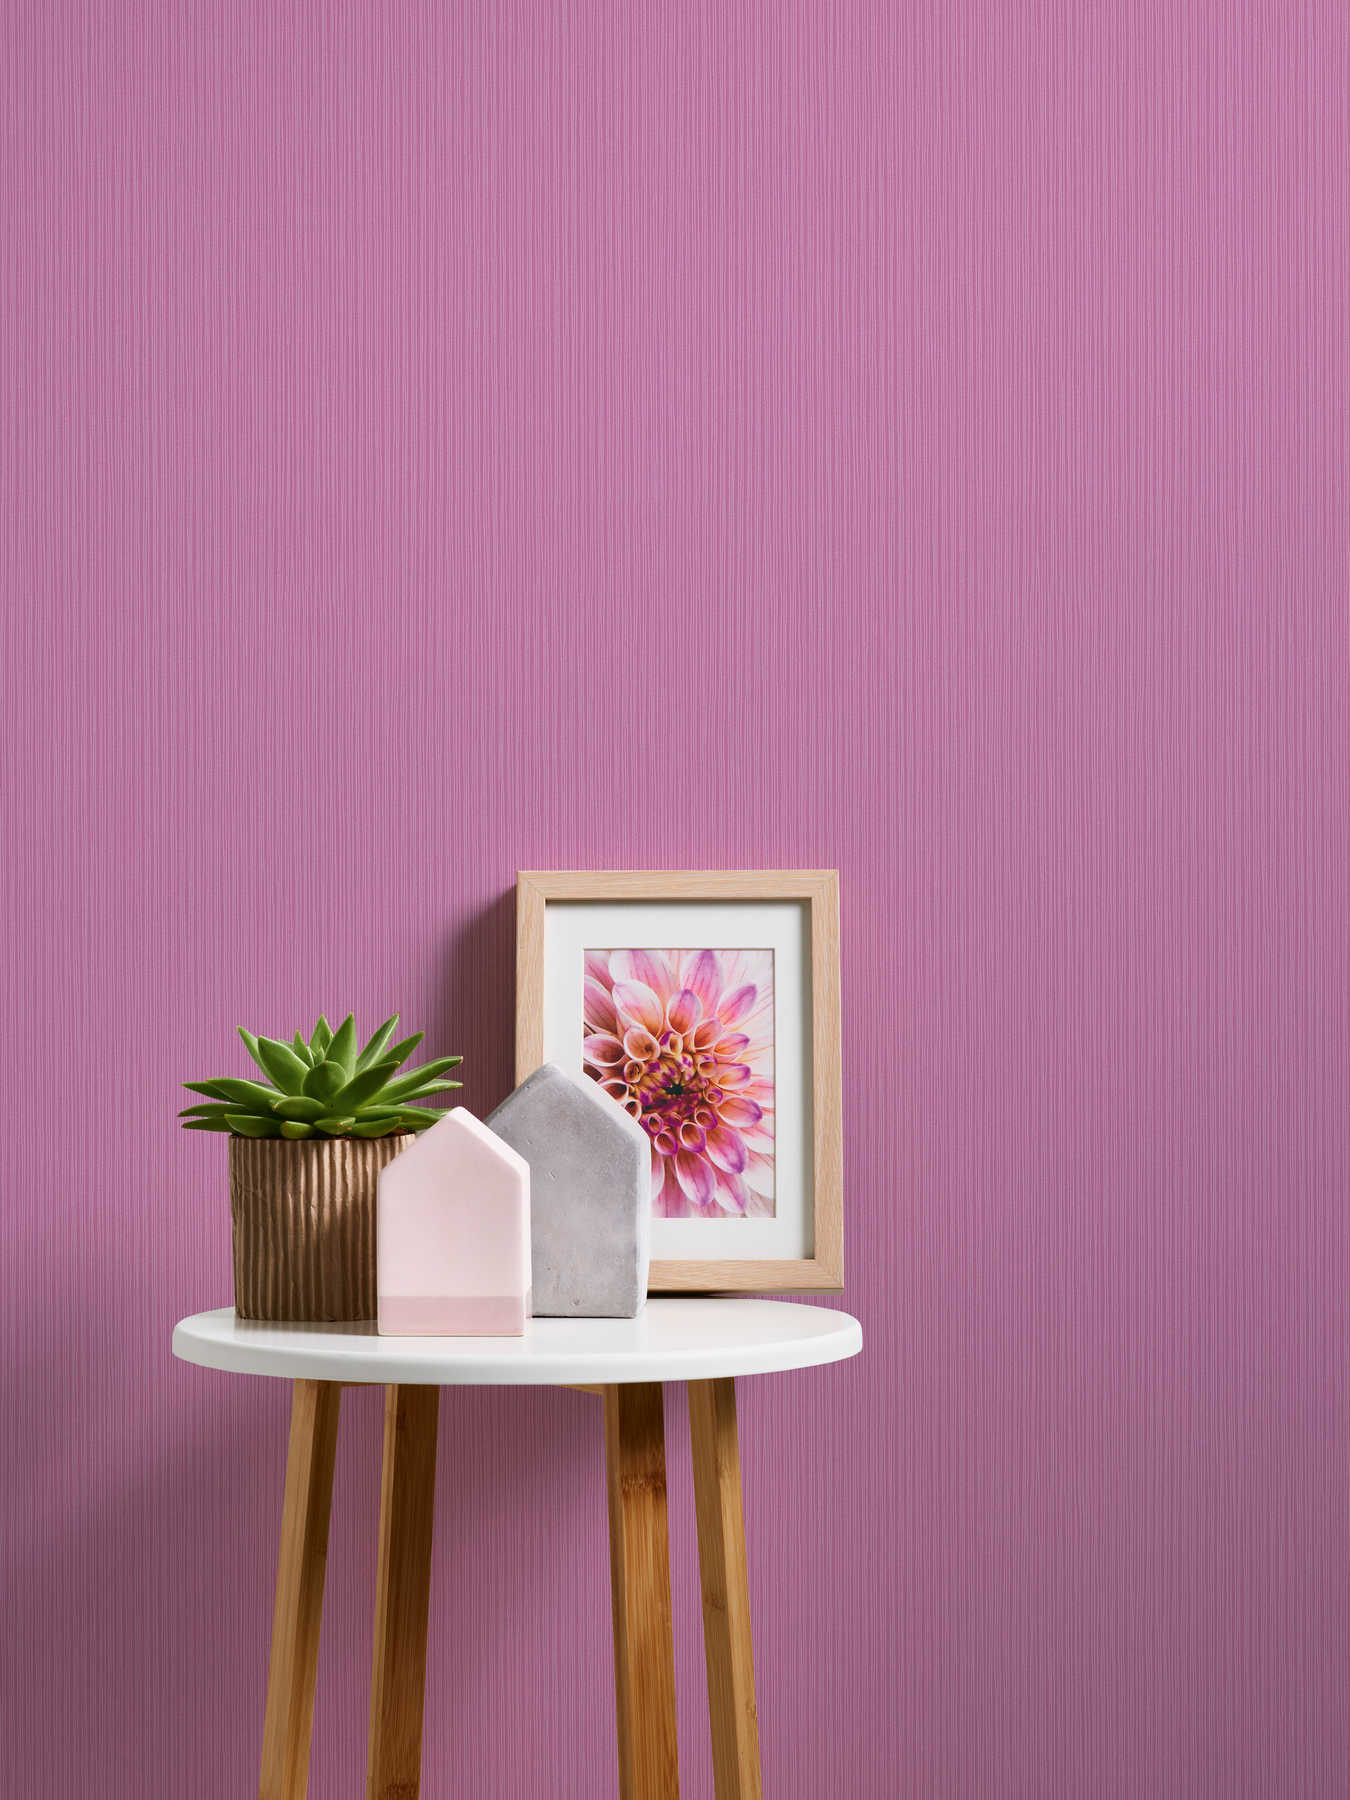             Wallpaper purple with line pattern & texture design
        